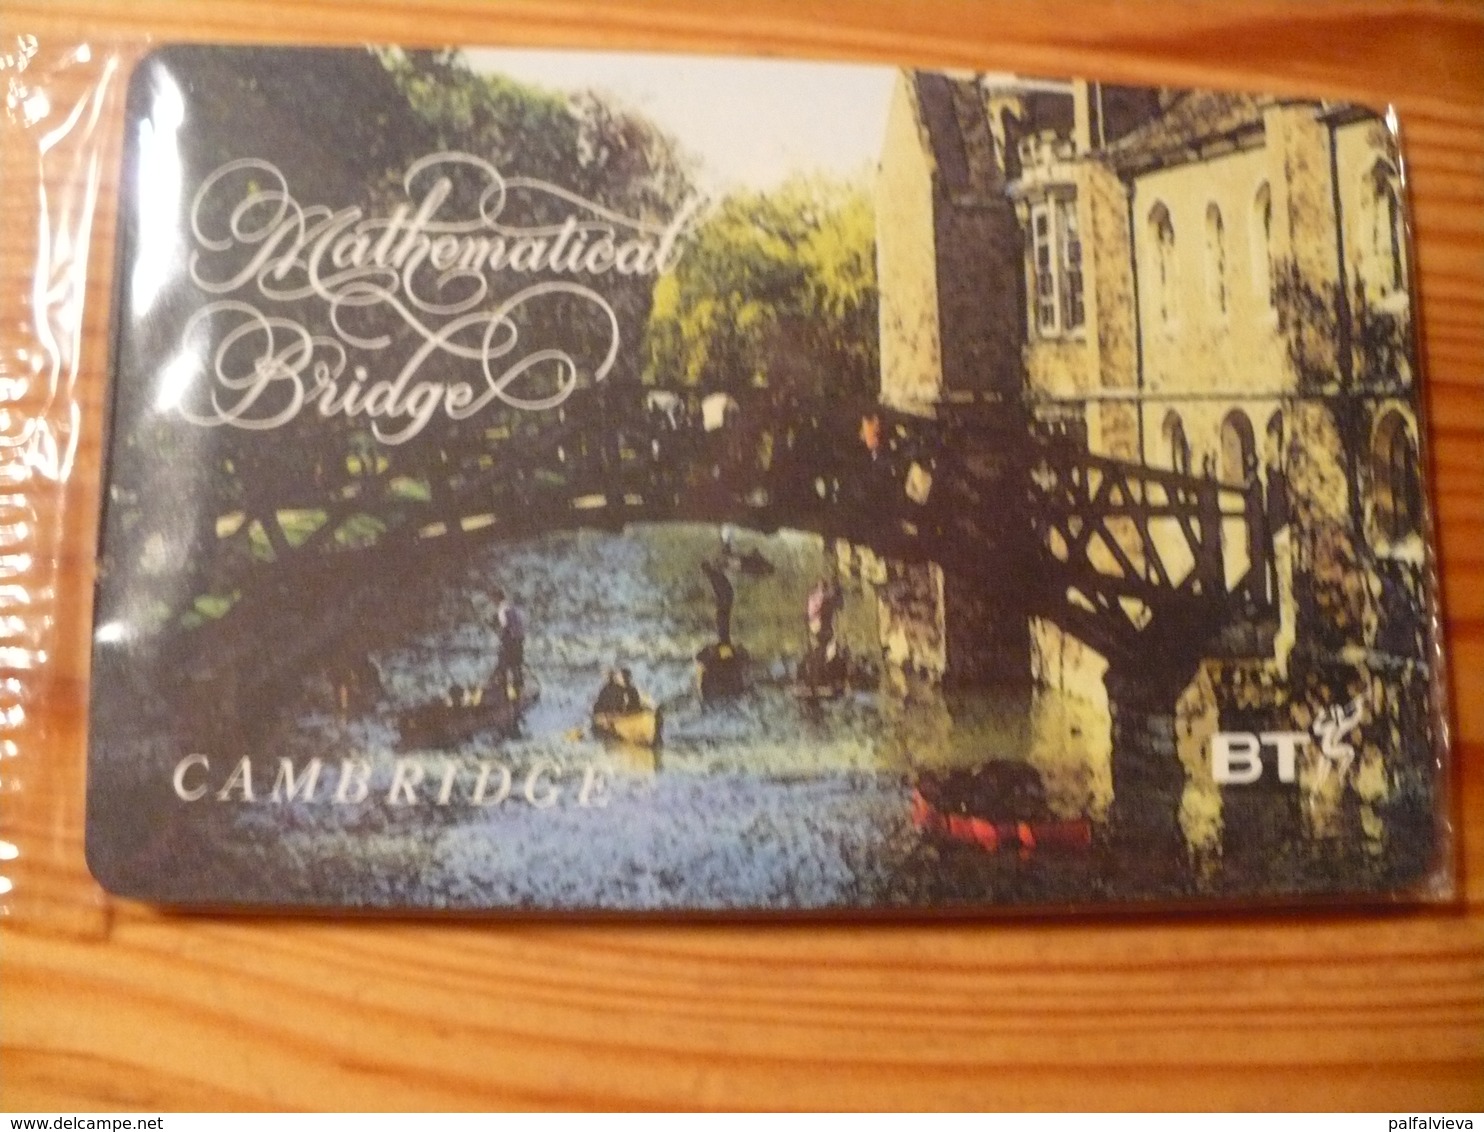 Phonecard United Kingdom, BT - Cambridge, Matchematical Bridge - BT Algemeen